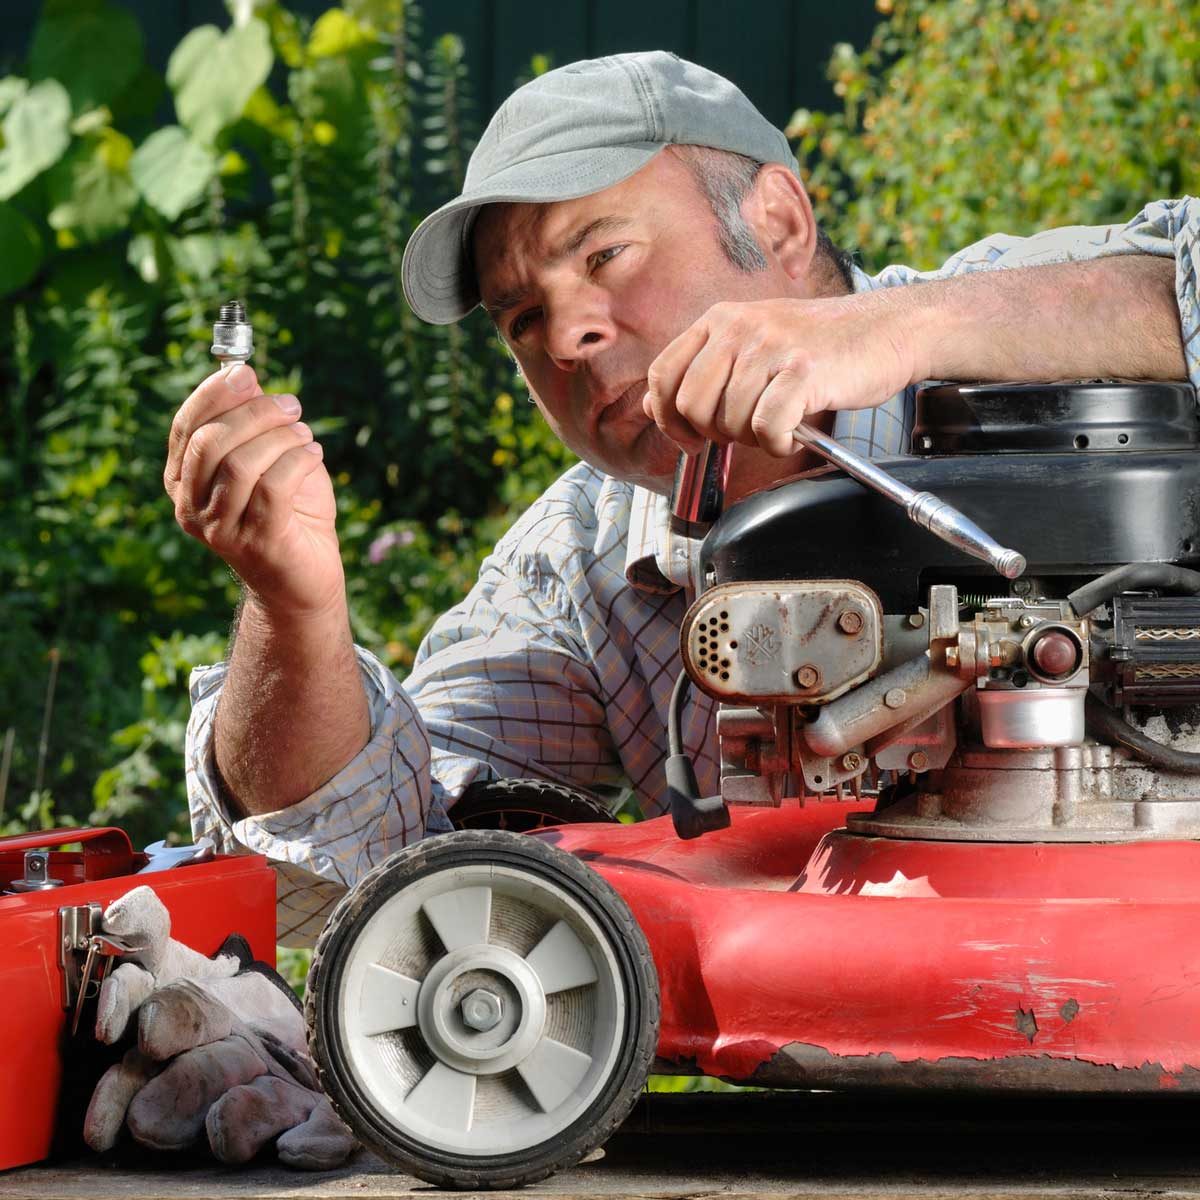 lawn-mower-spark-plugs-101-the-family-handyman